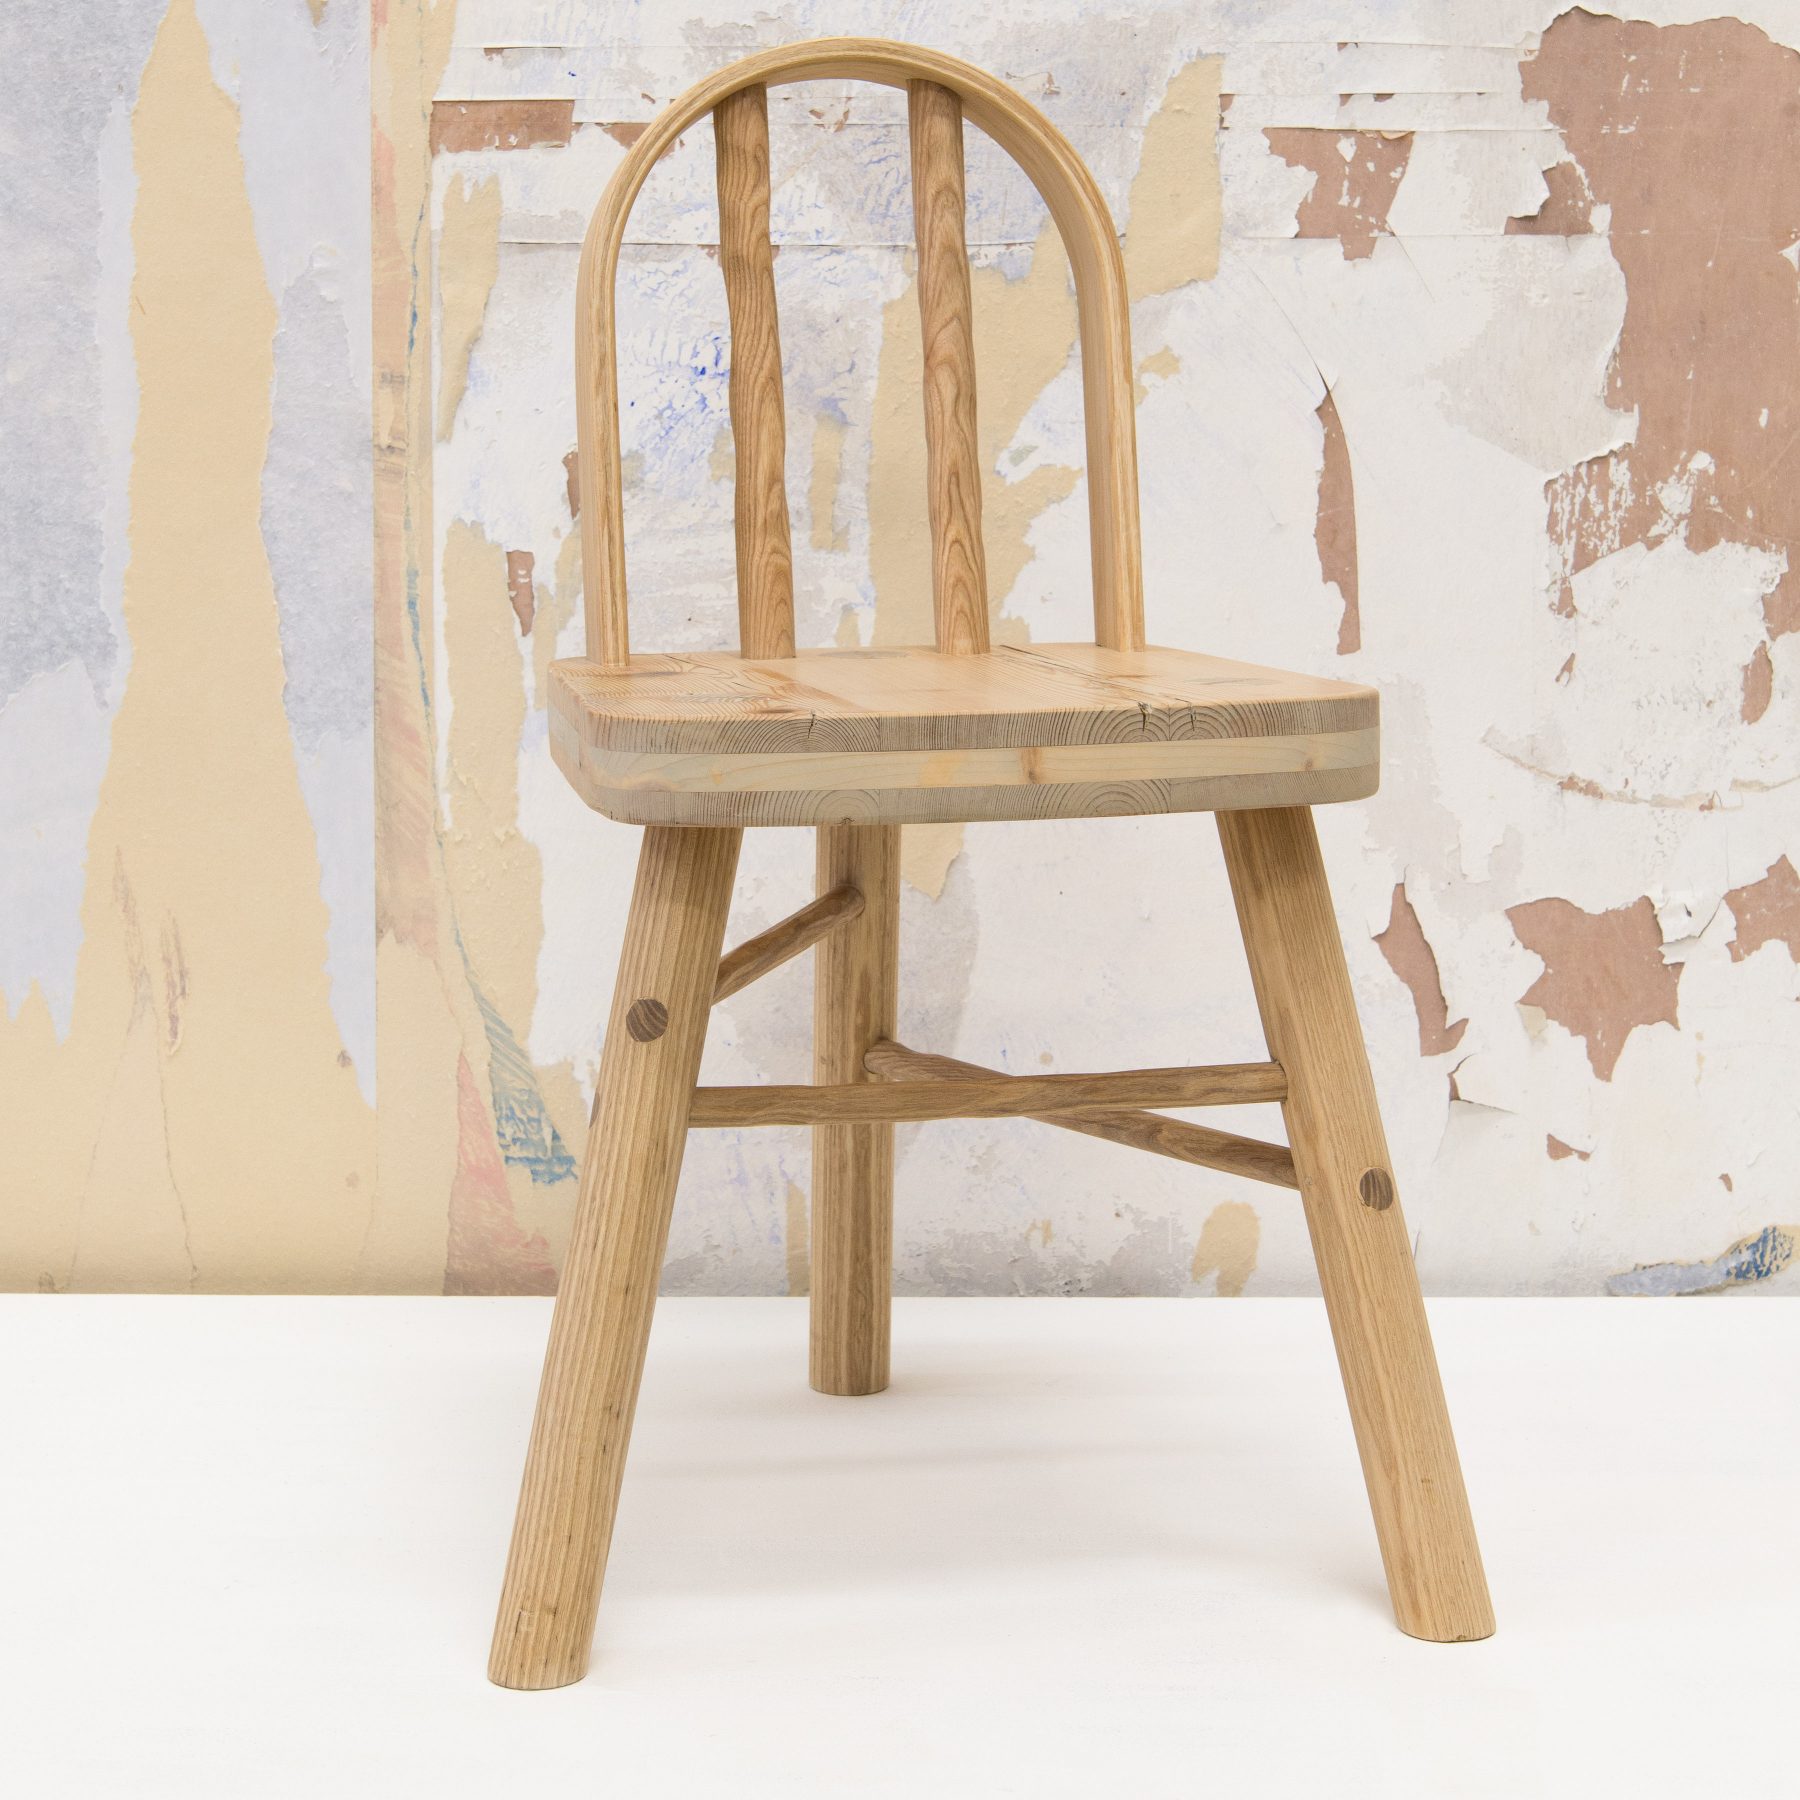 Jan Hendzel Studio lentini chair-4